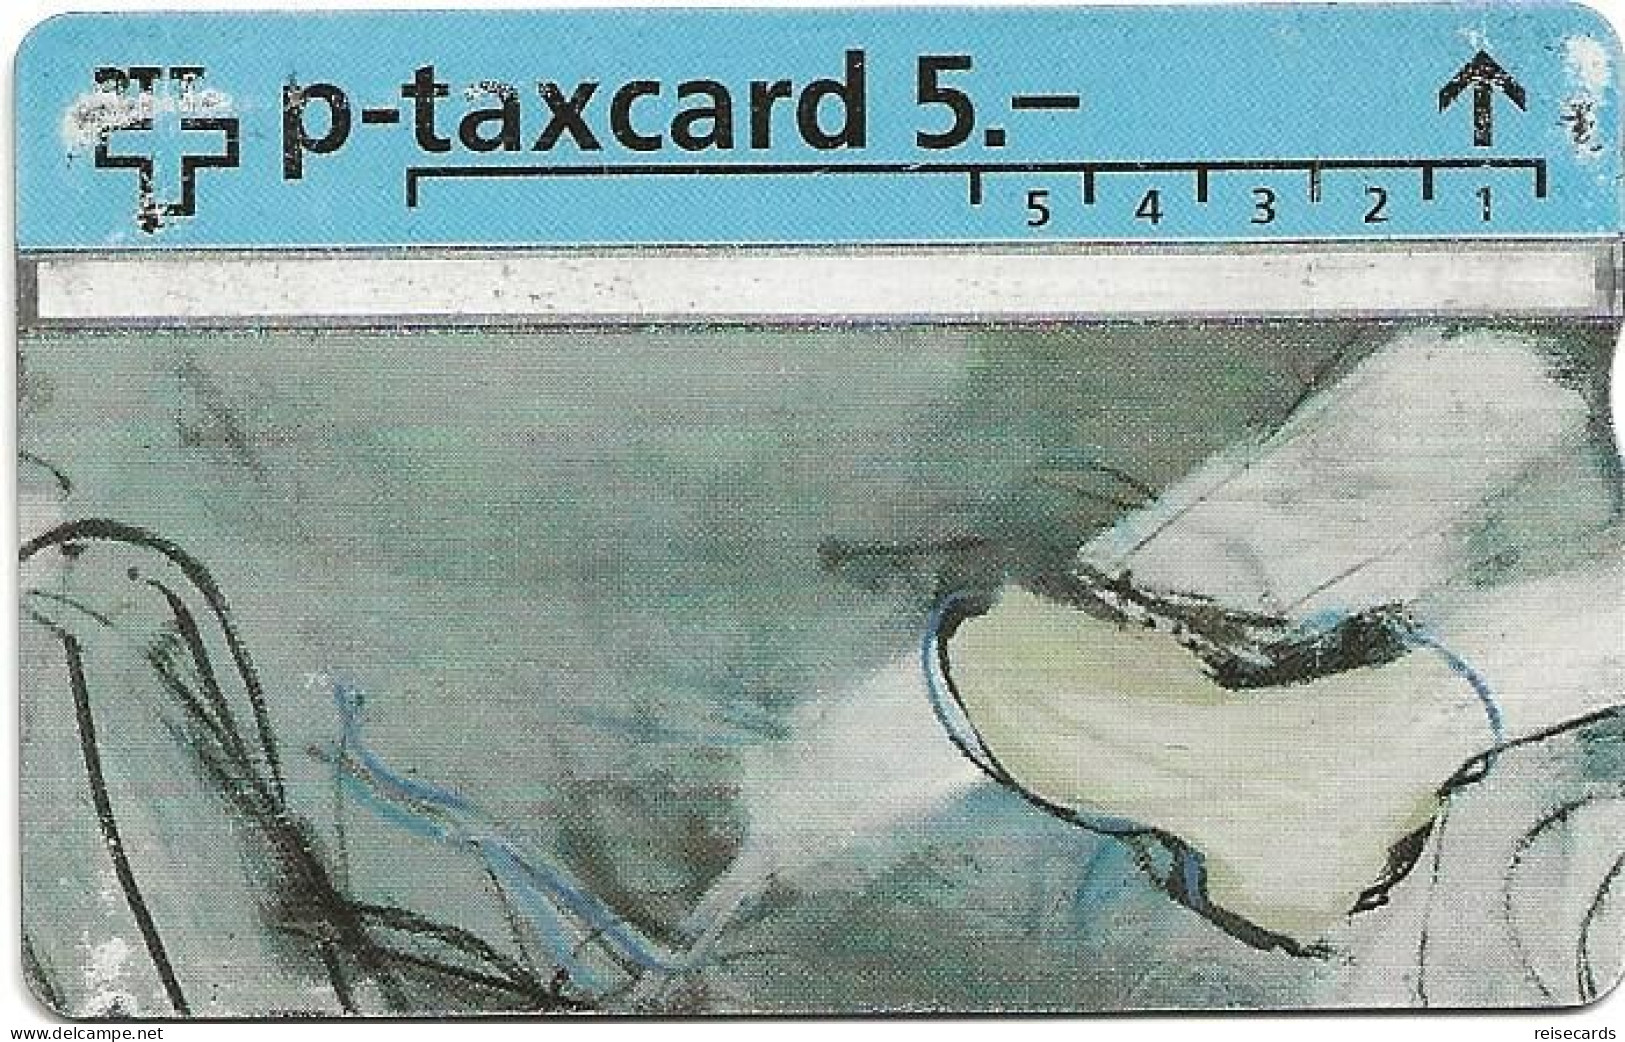 Switzerland: PTT K P 93/06 326L SmithKline Beecham - Art-Tax-Card Mario Comensoli - Switzerland